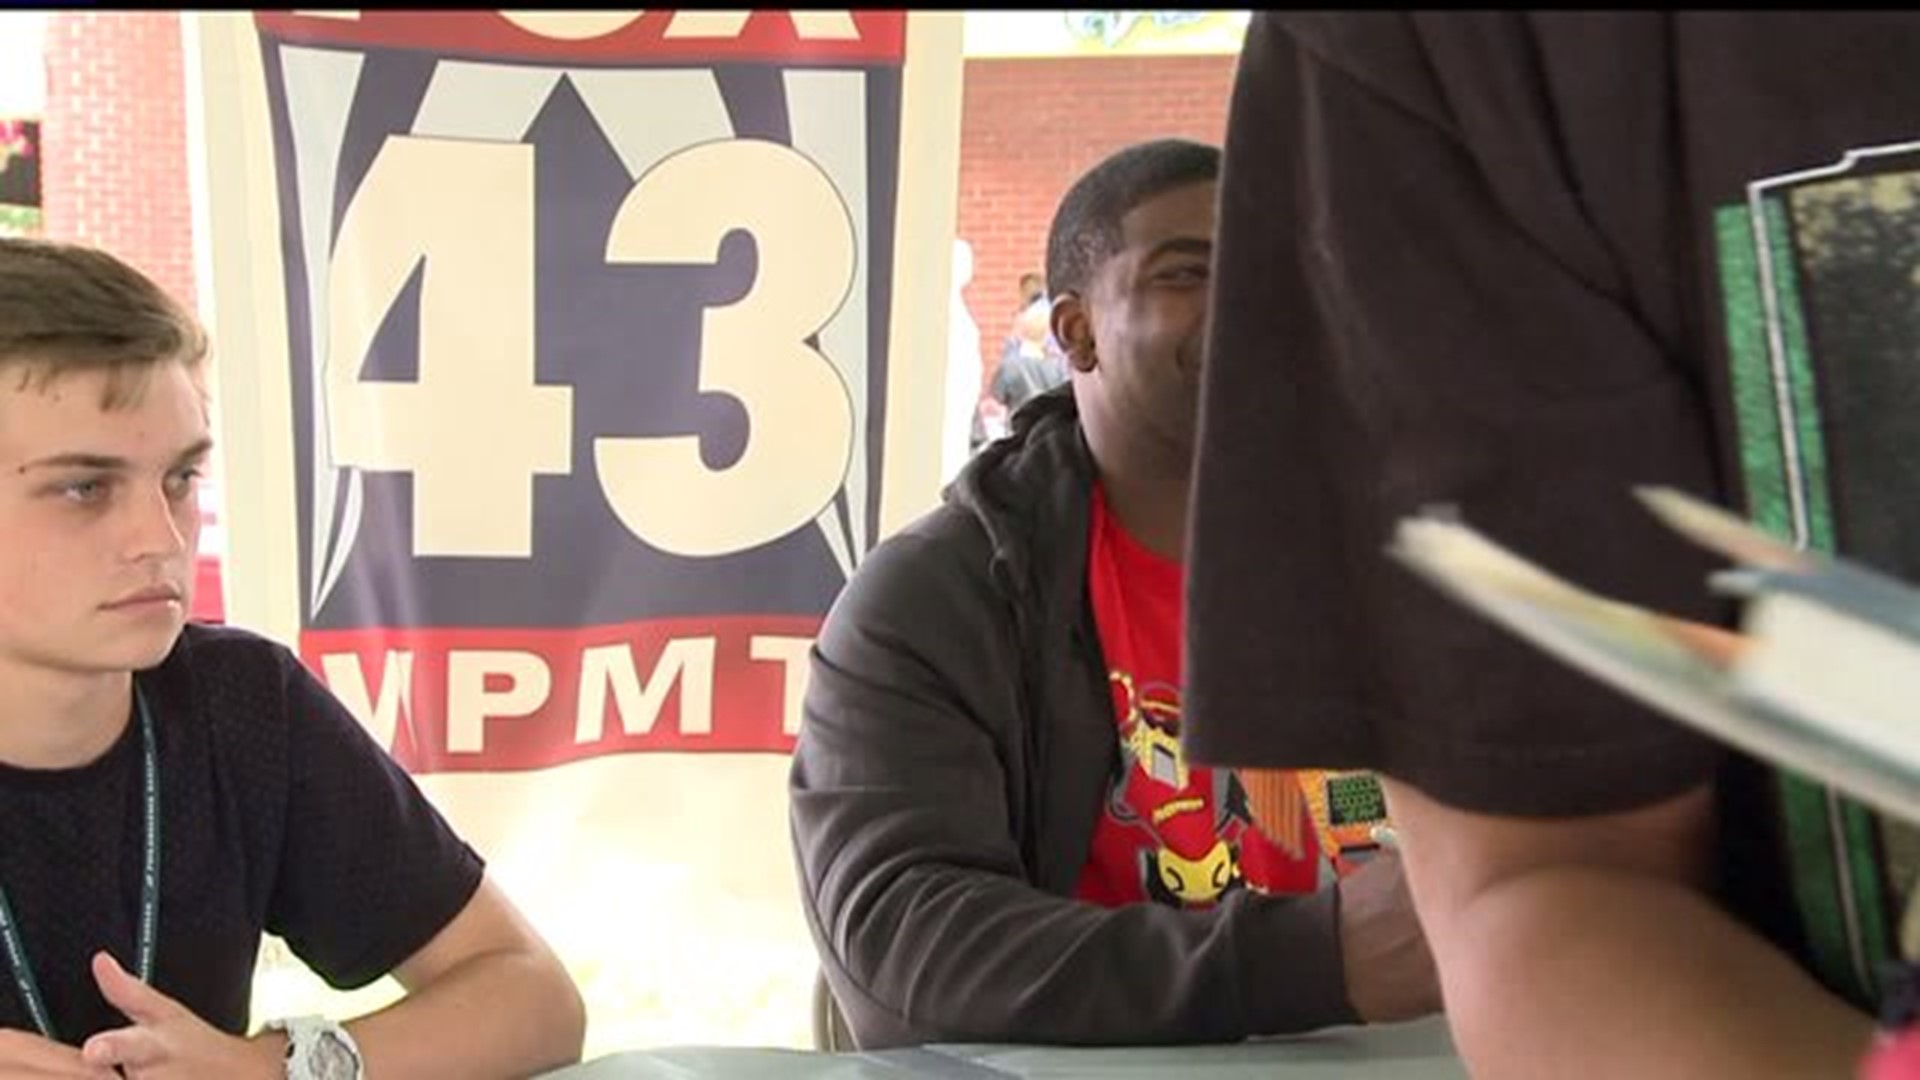 Eagles players sign autographs at Rockvale Outlets